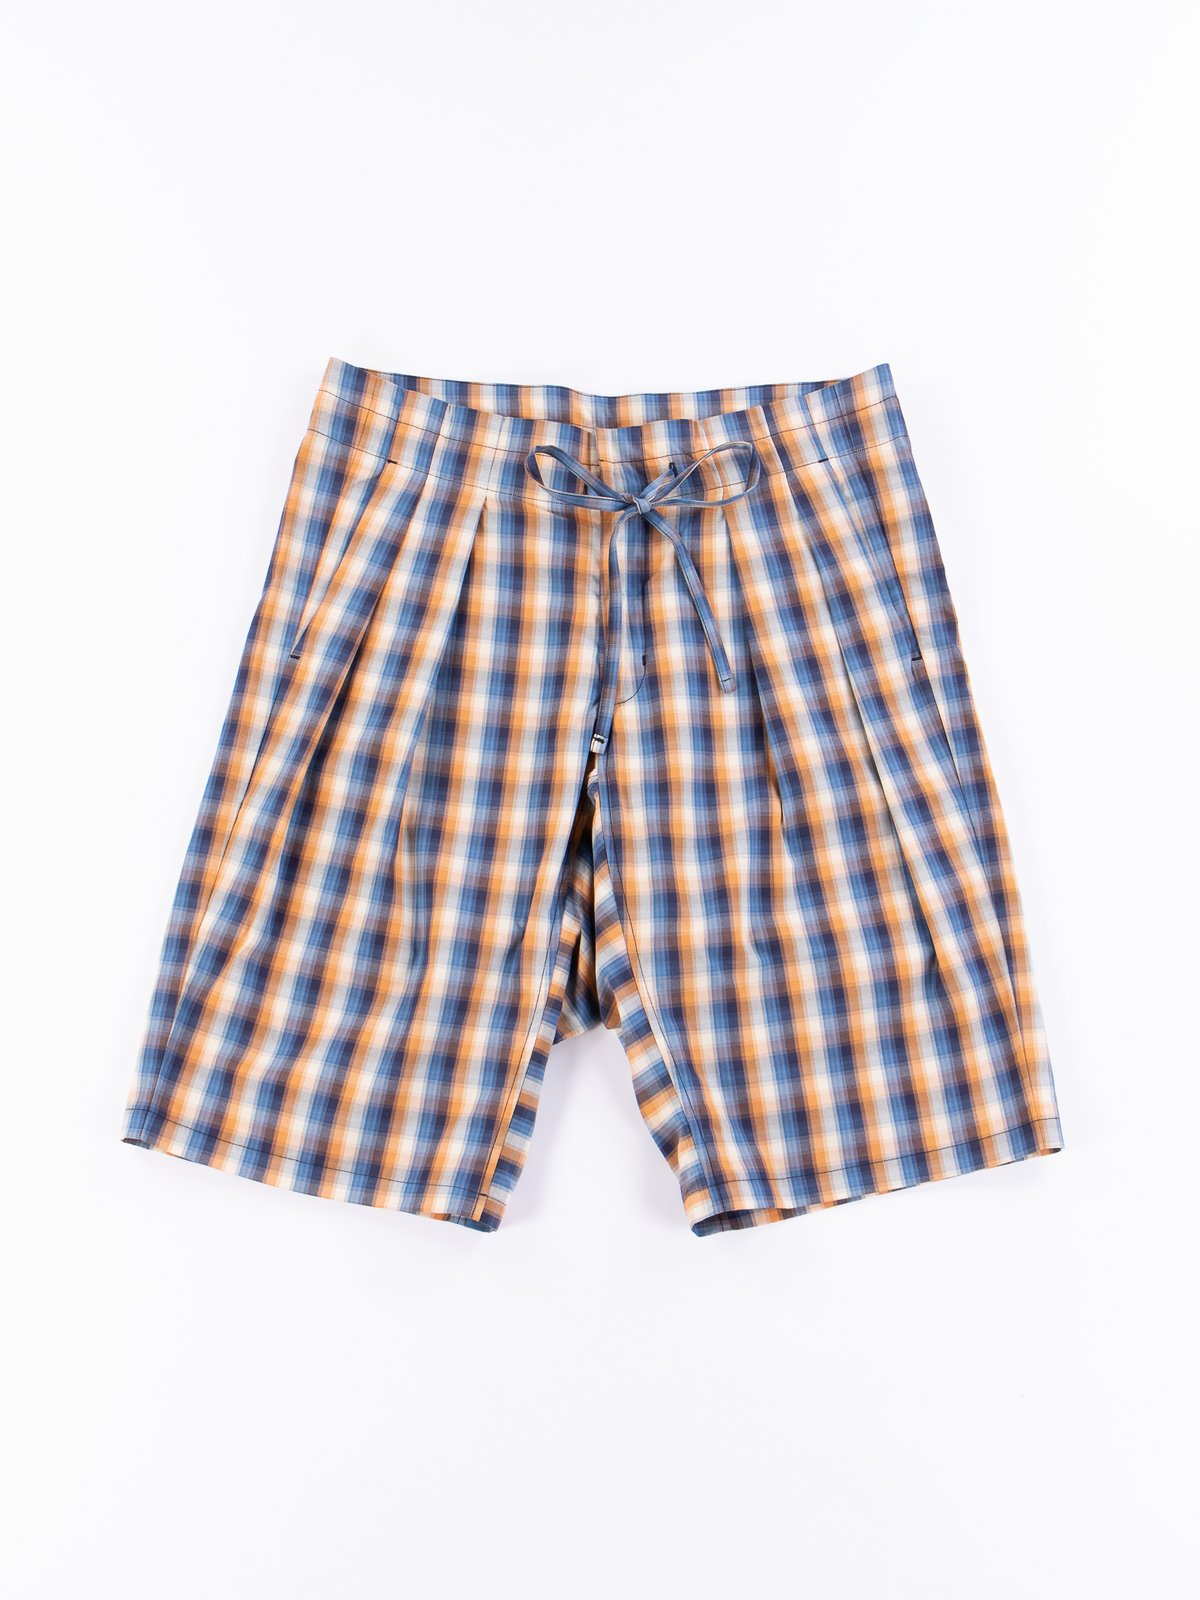 Blue/Orange Plaid Oxford Vancloth Drop Crotch Shorts - Image 1